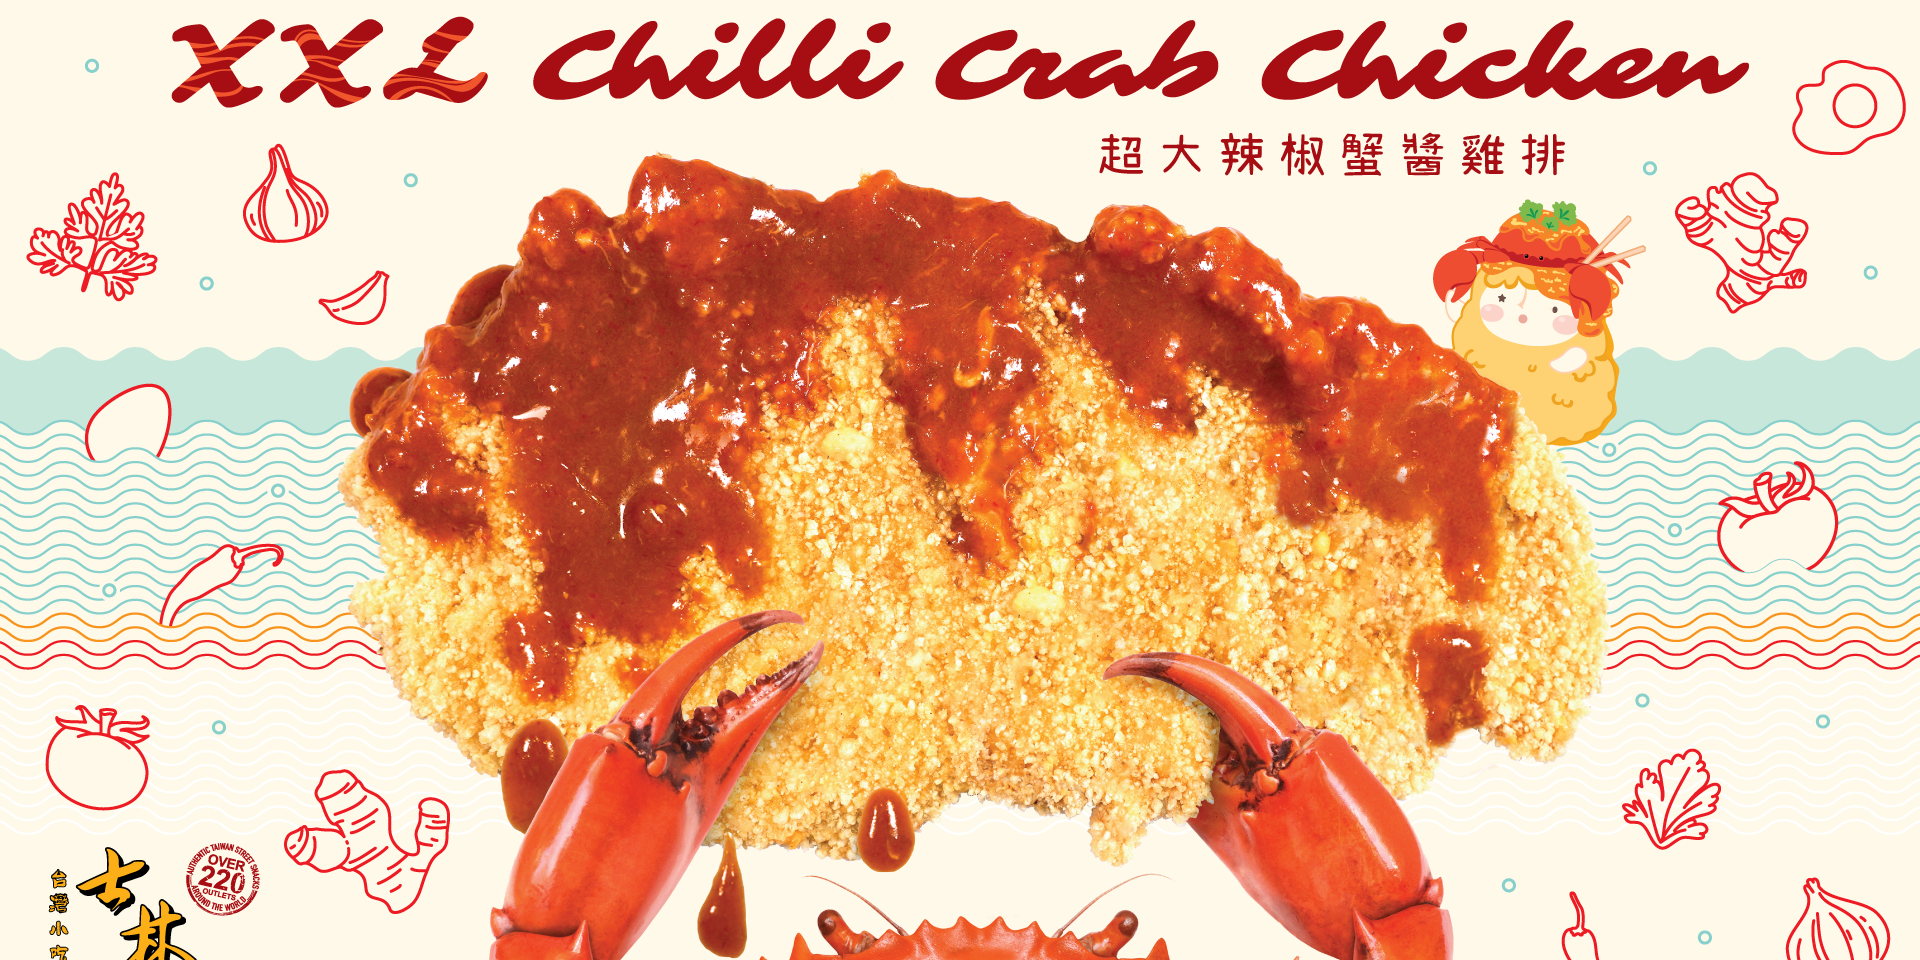 [Promotion] 20% OFF Shihlin’s XXL Chilli Crab Chicken Set!